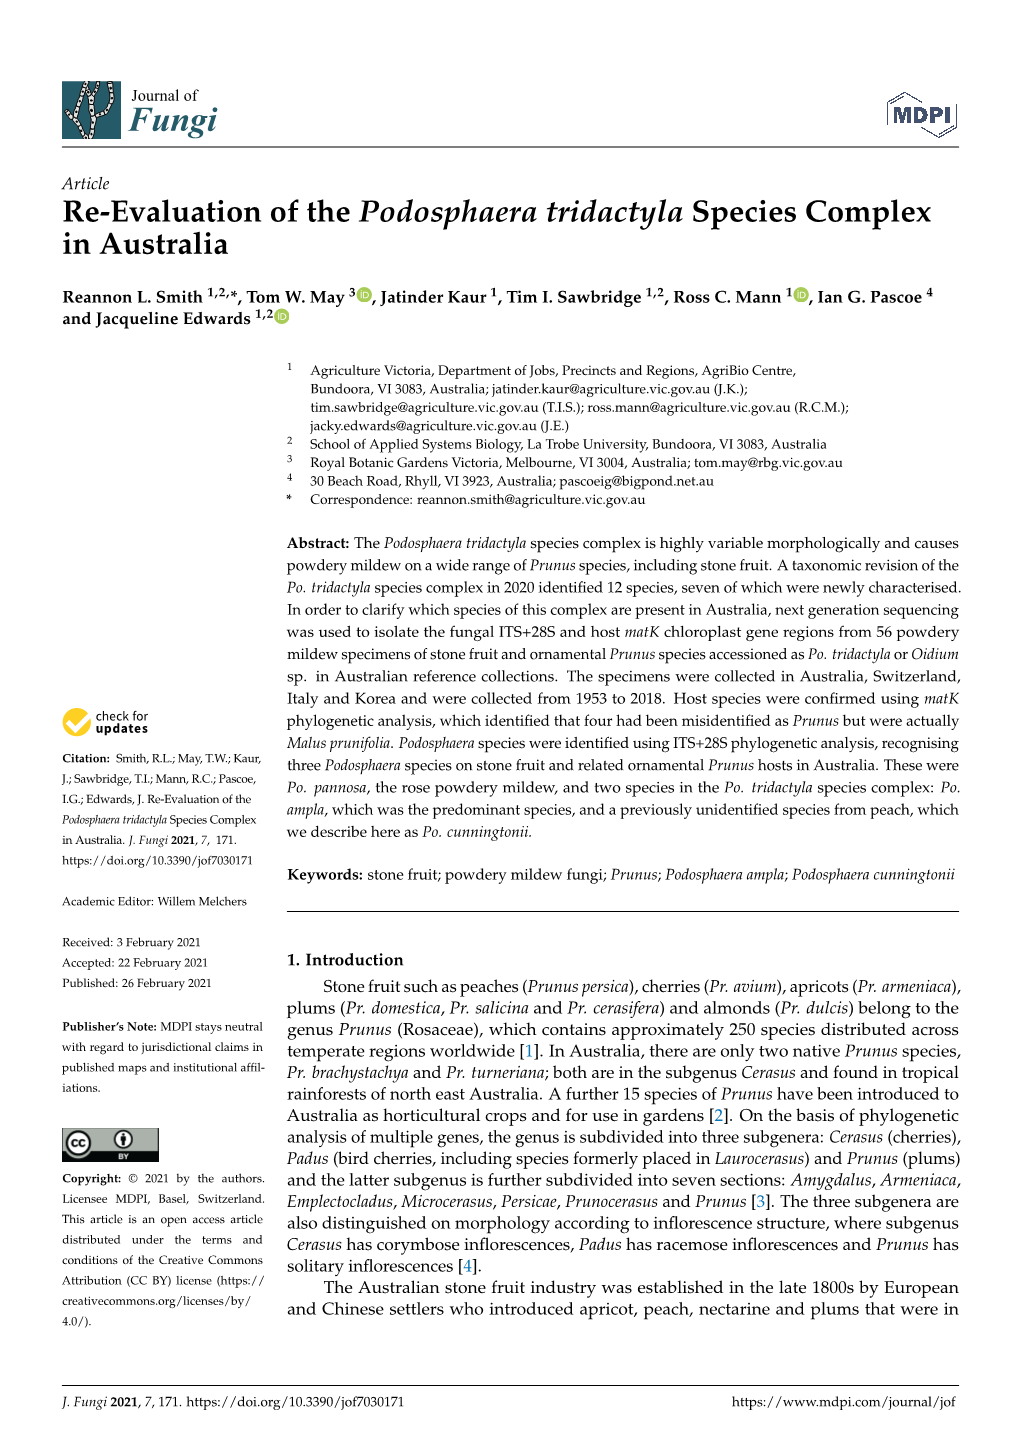 Re-Evaluation of the Podosphaera Tridactyla Species Complex in Australia